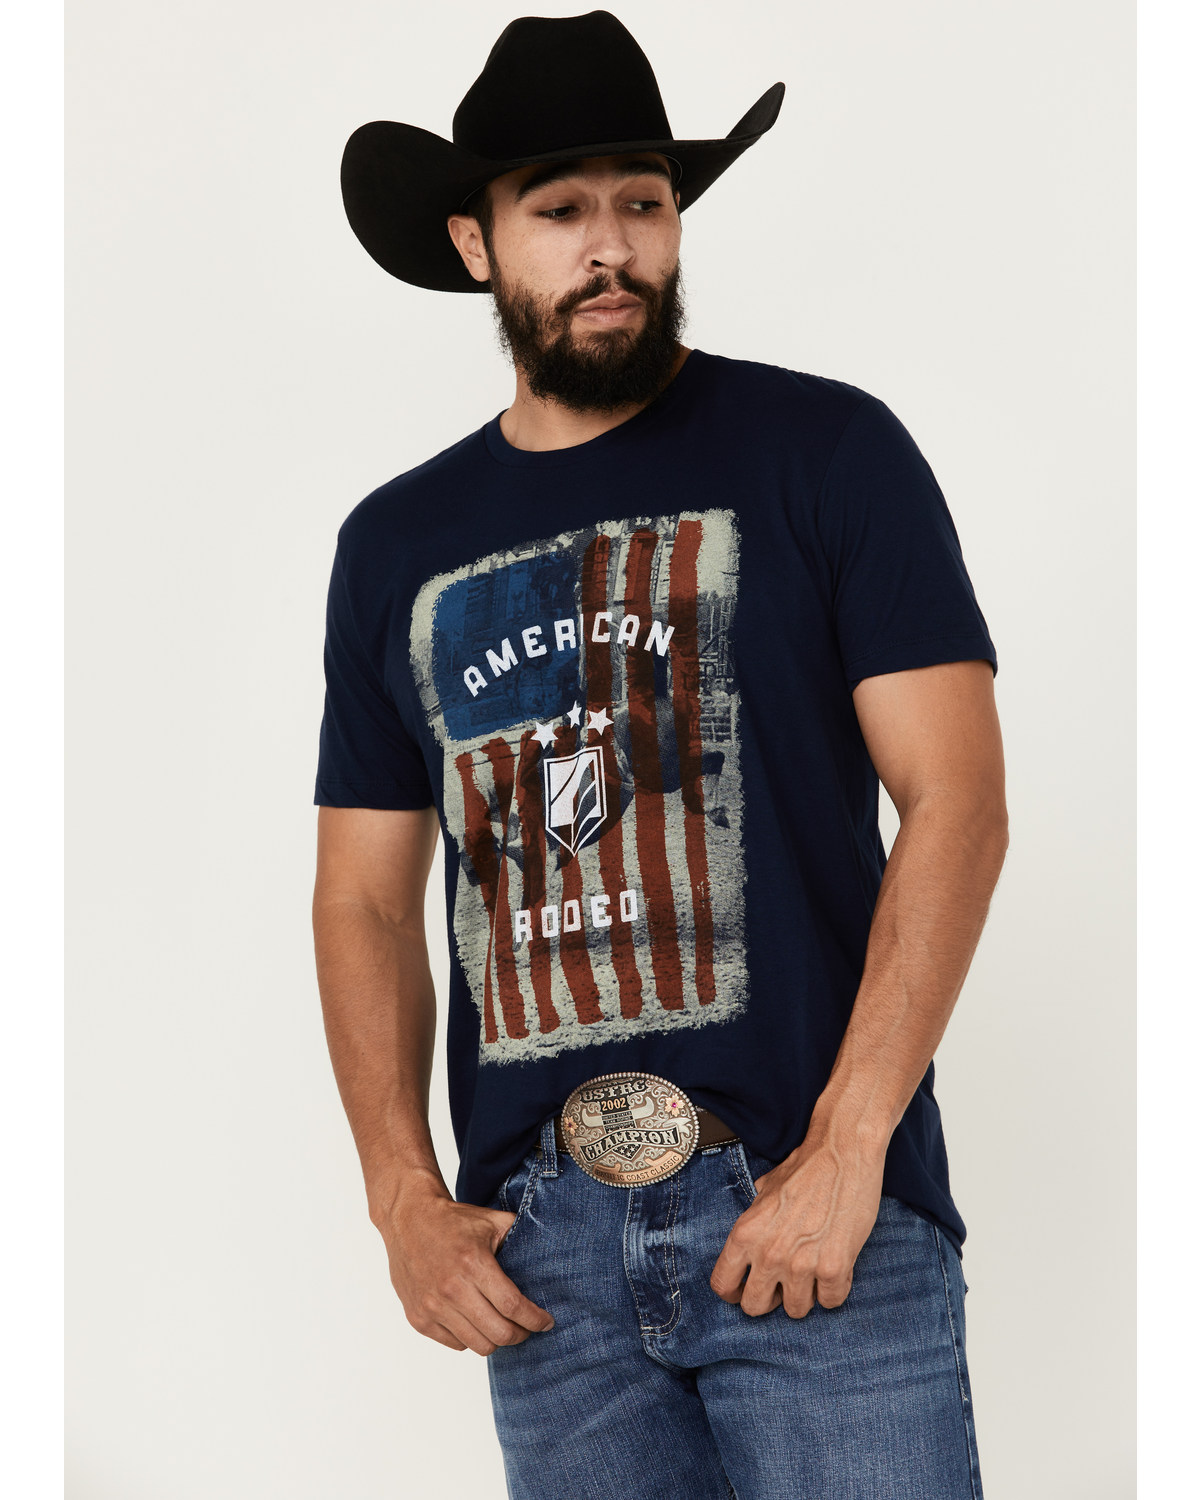 RANK 45® Men's American Rodeo Short Sleeve Graphic T-Shirt